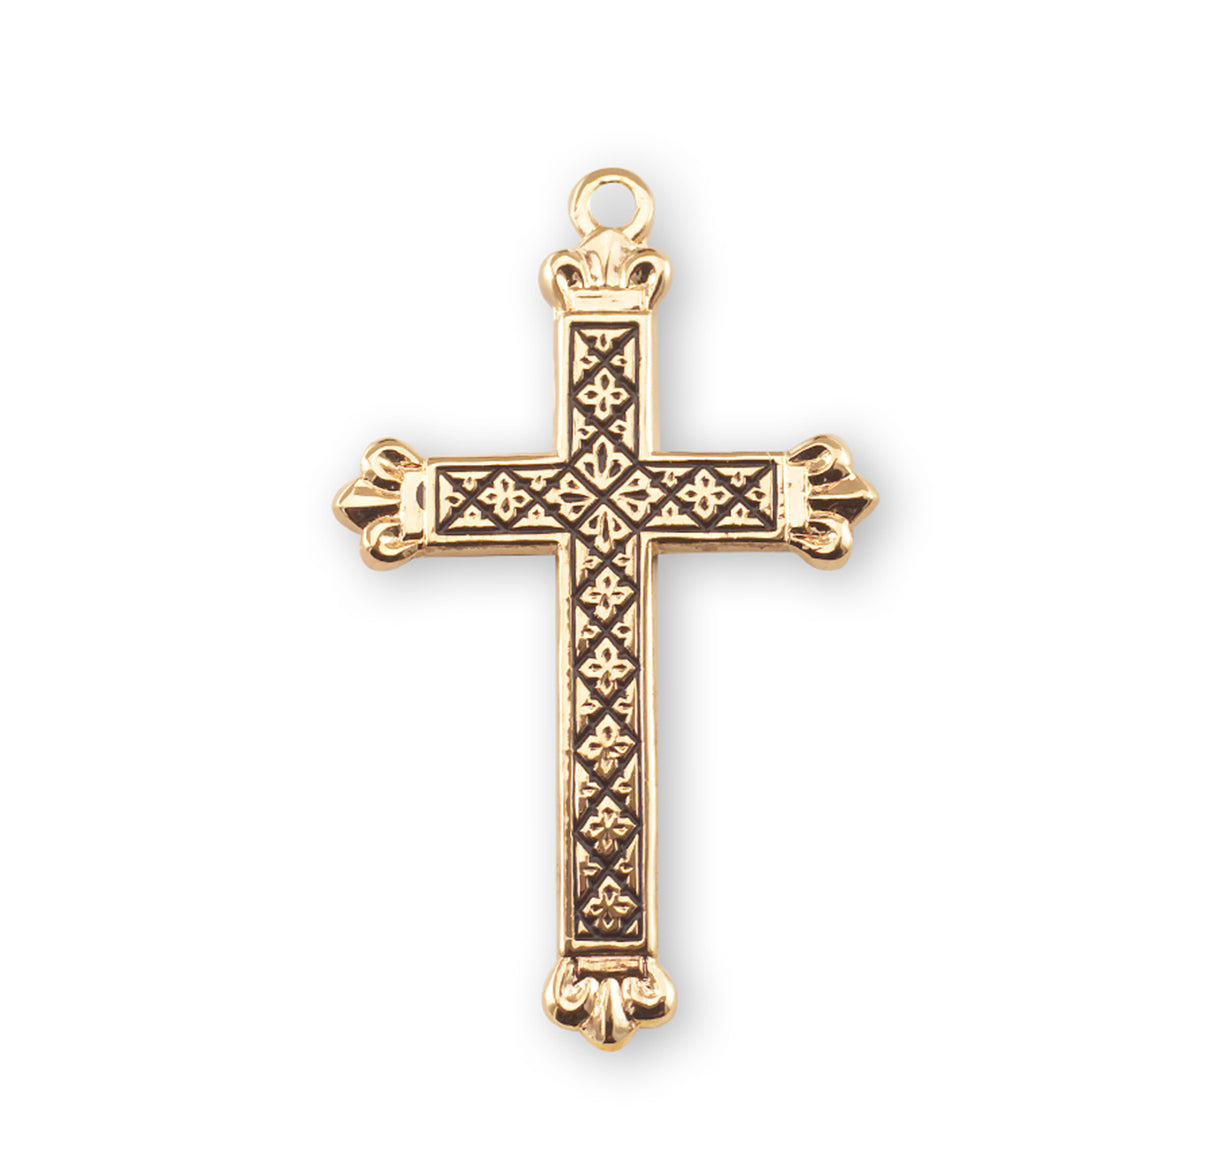 Gold Cross Necklace with Black Enamel Design (1.2